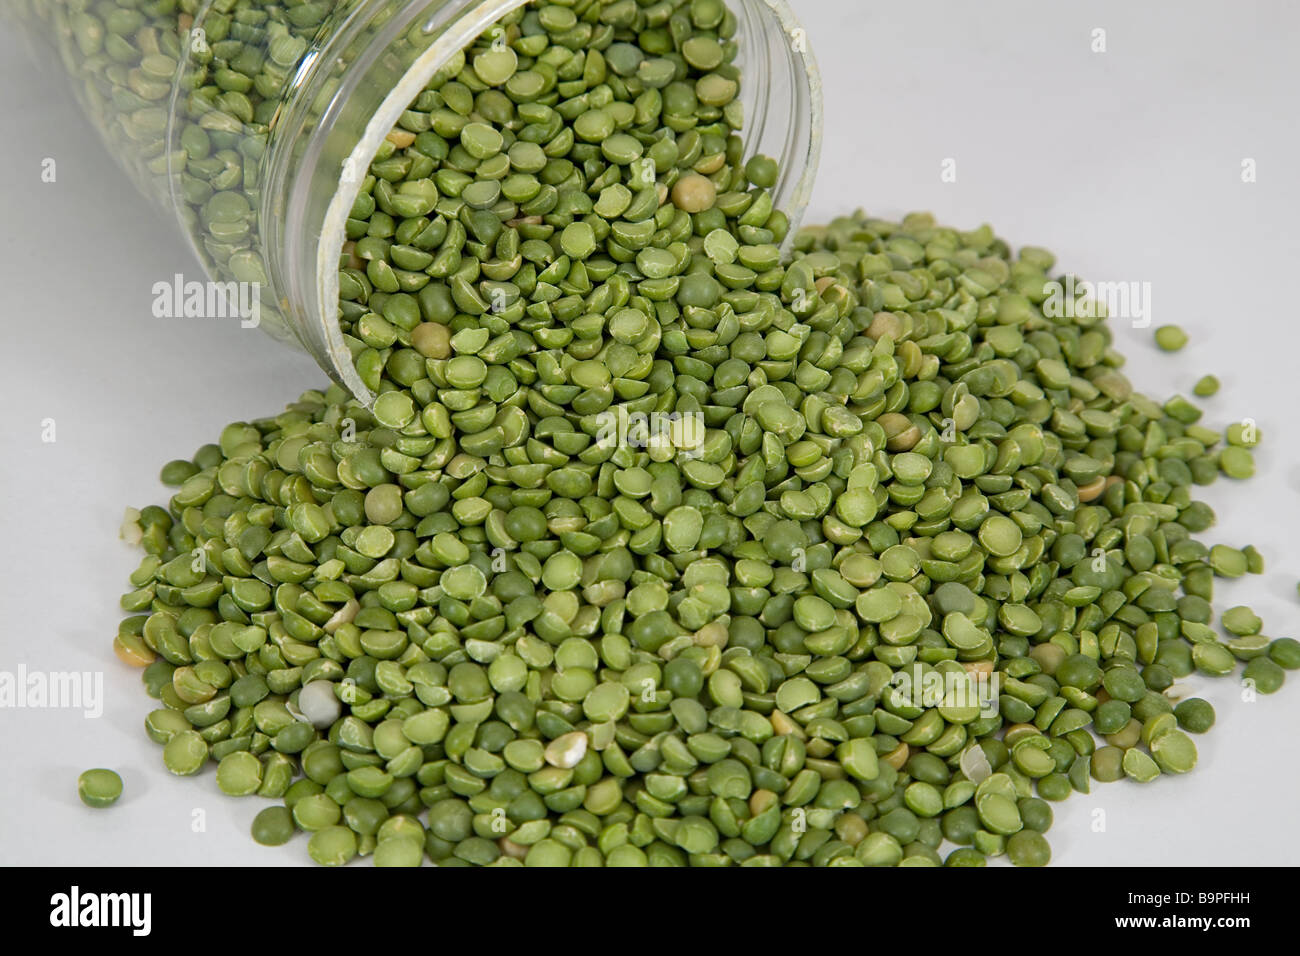 Split green peas lentils legume being stored in a jar Stock Photo